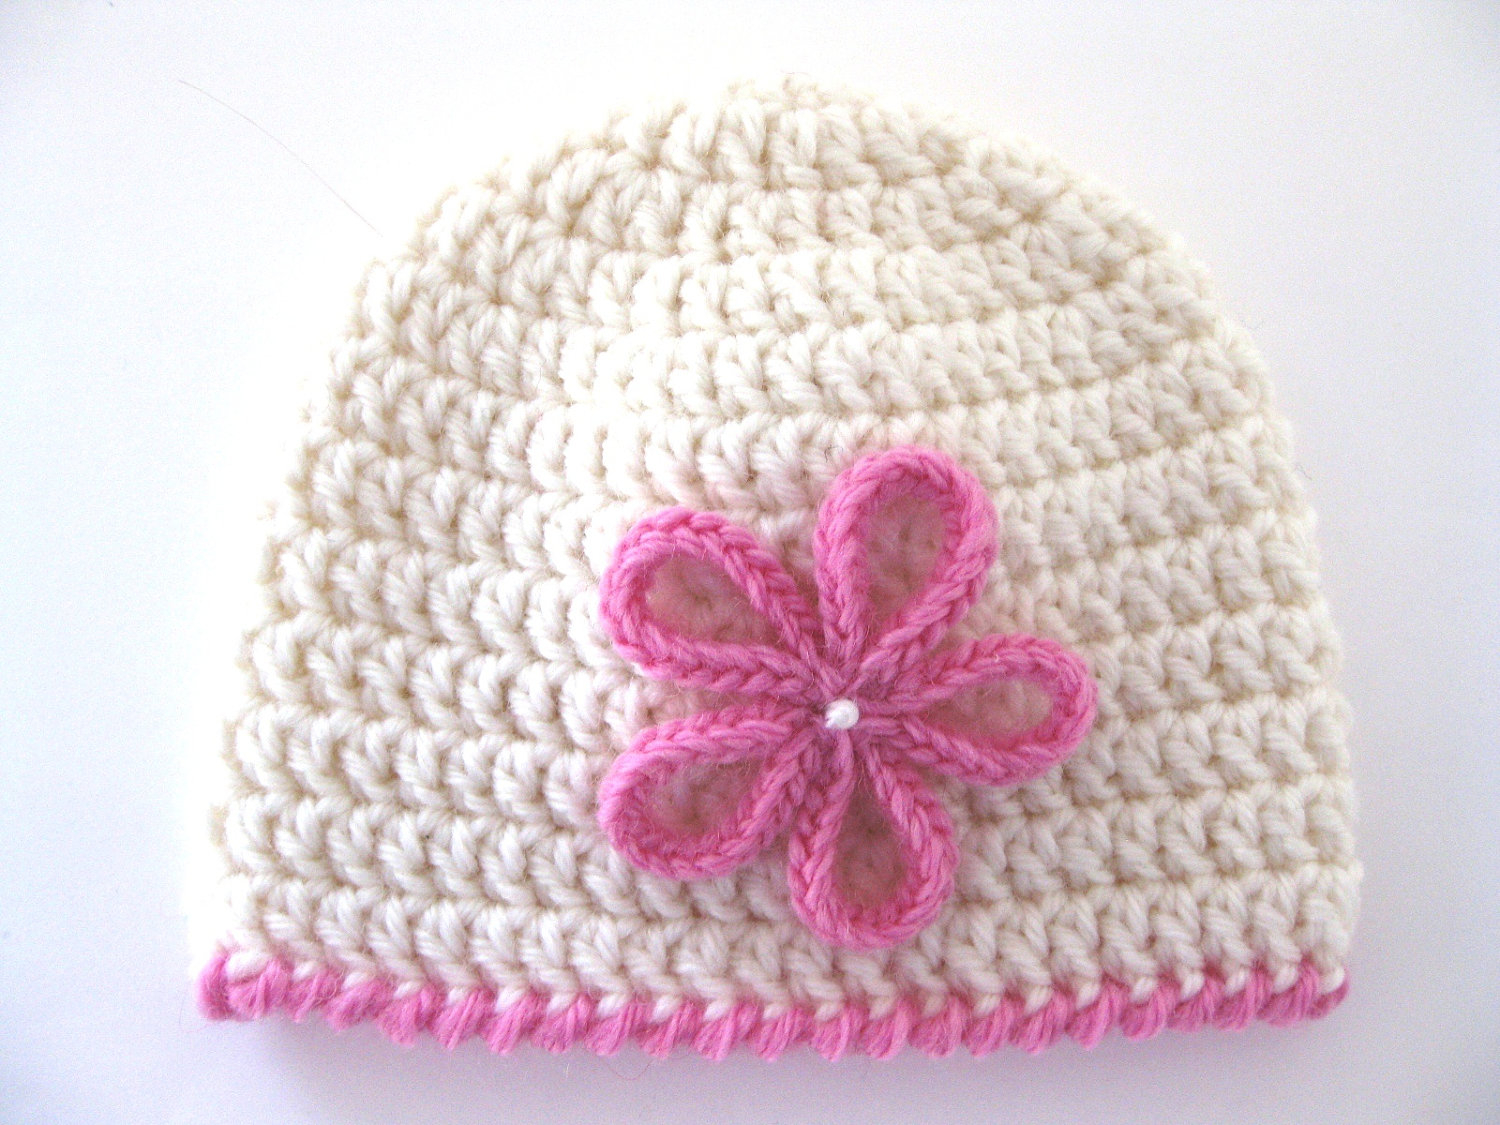 Knitted Preemie Hat Patterns Pattern Preemie Crochet Hat Flower Pdf Girl Ba Edging White Pink Beanie Embellish Applique Double Crochet Treble Clear Instructions